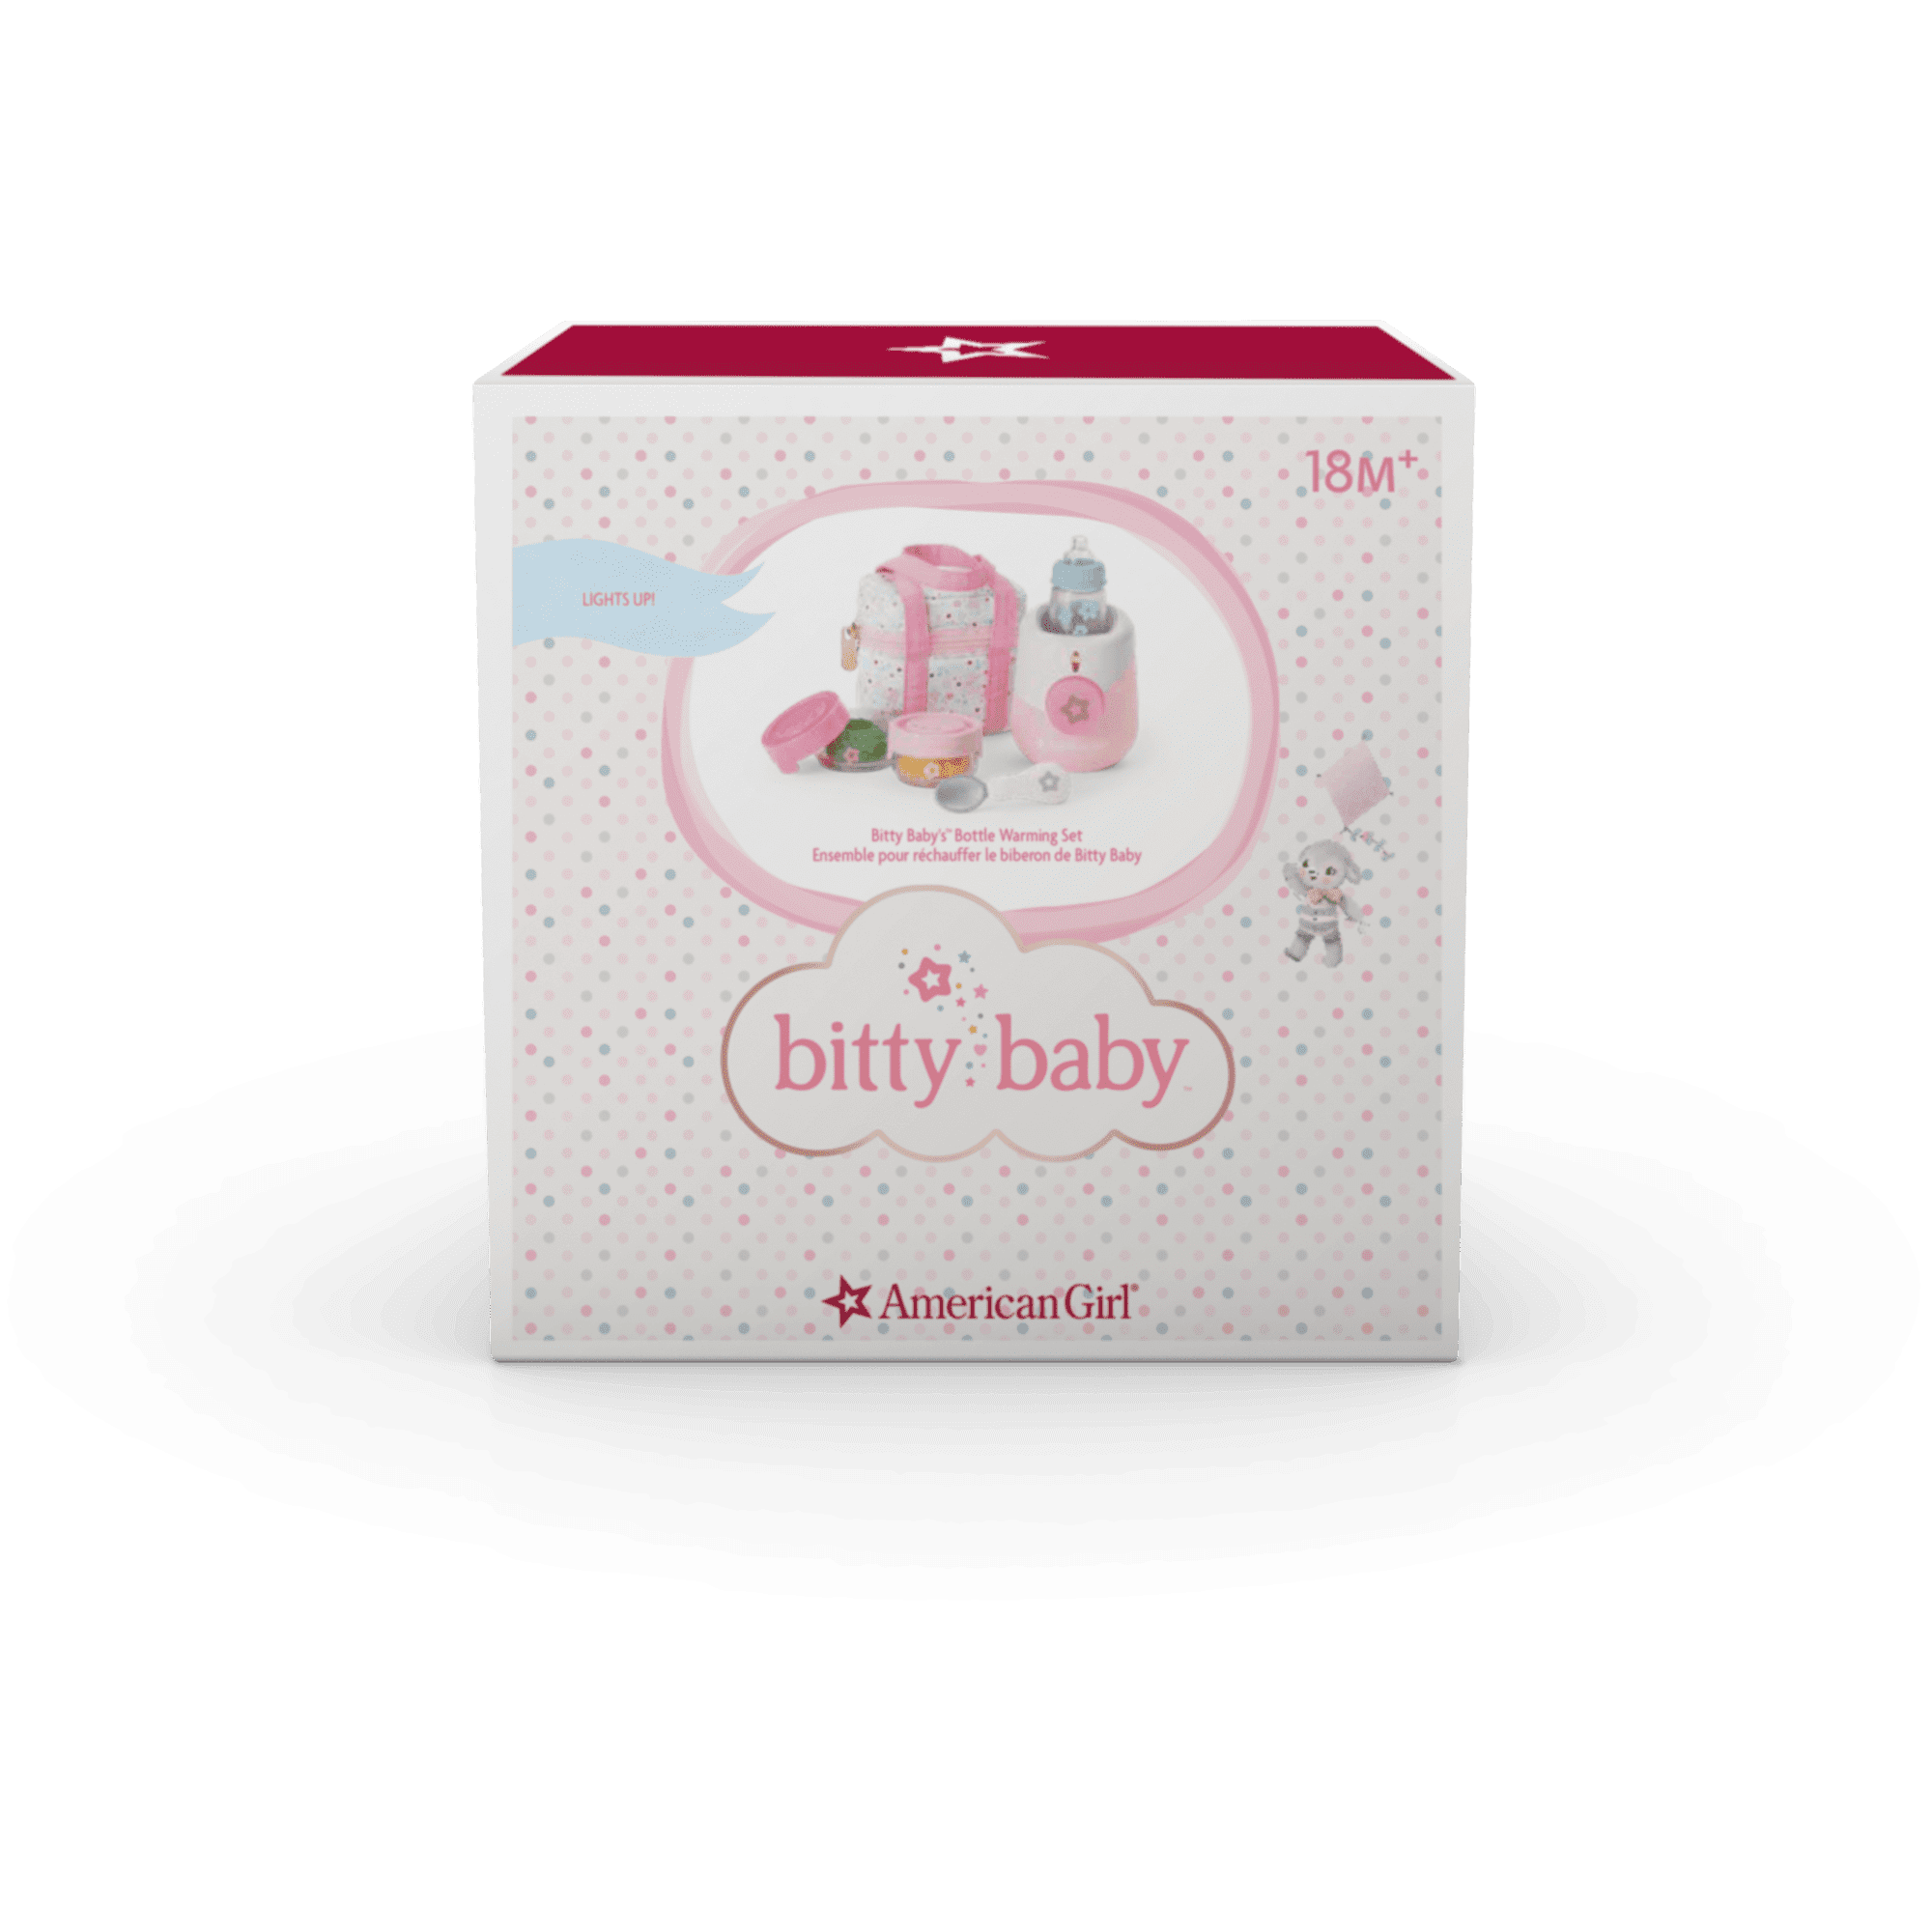 Bitty Baby’s™ Bottle-Warming Set